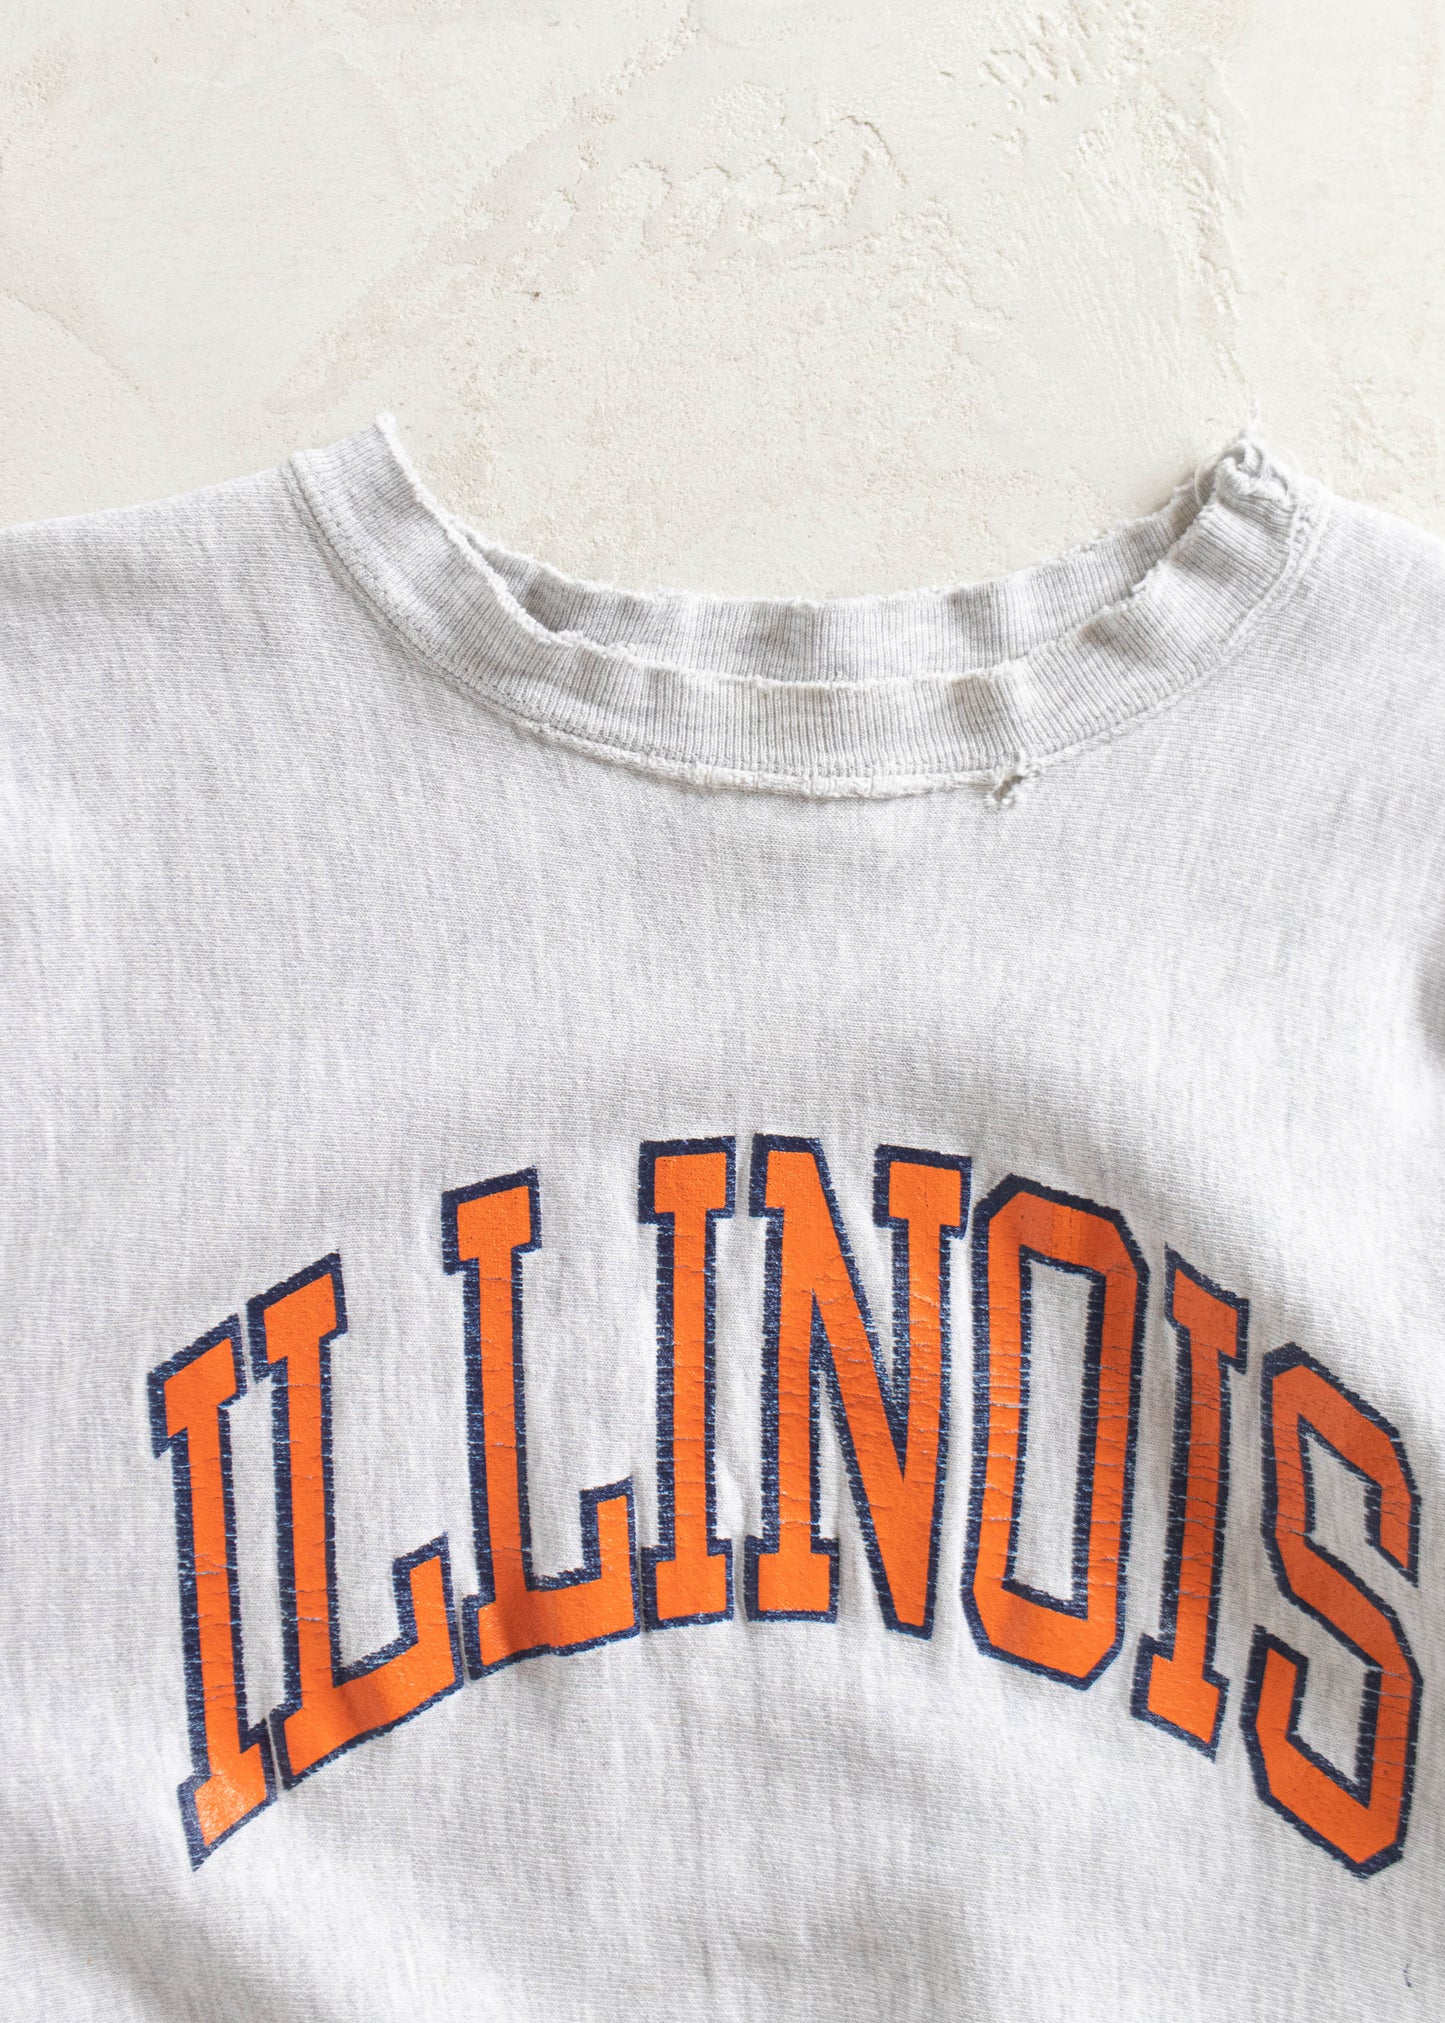 Vintage 1980s Champion Reverse Weave Warmup Illinois Sweatshirt Size M/L